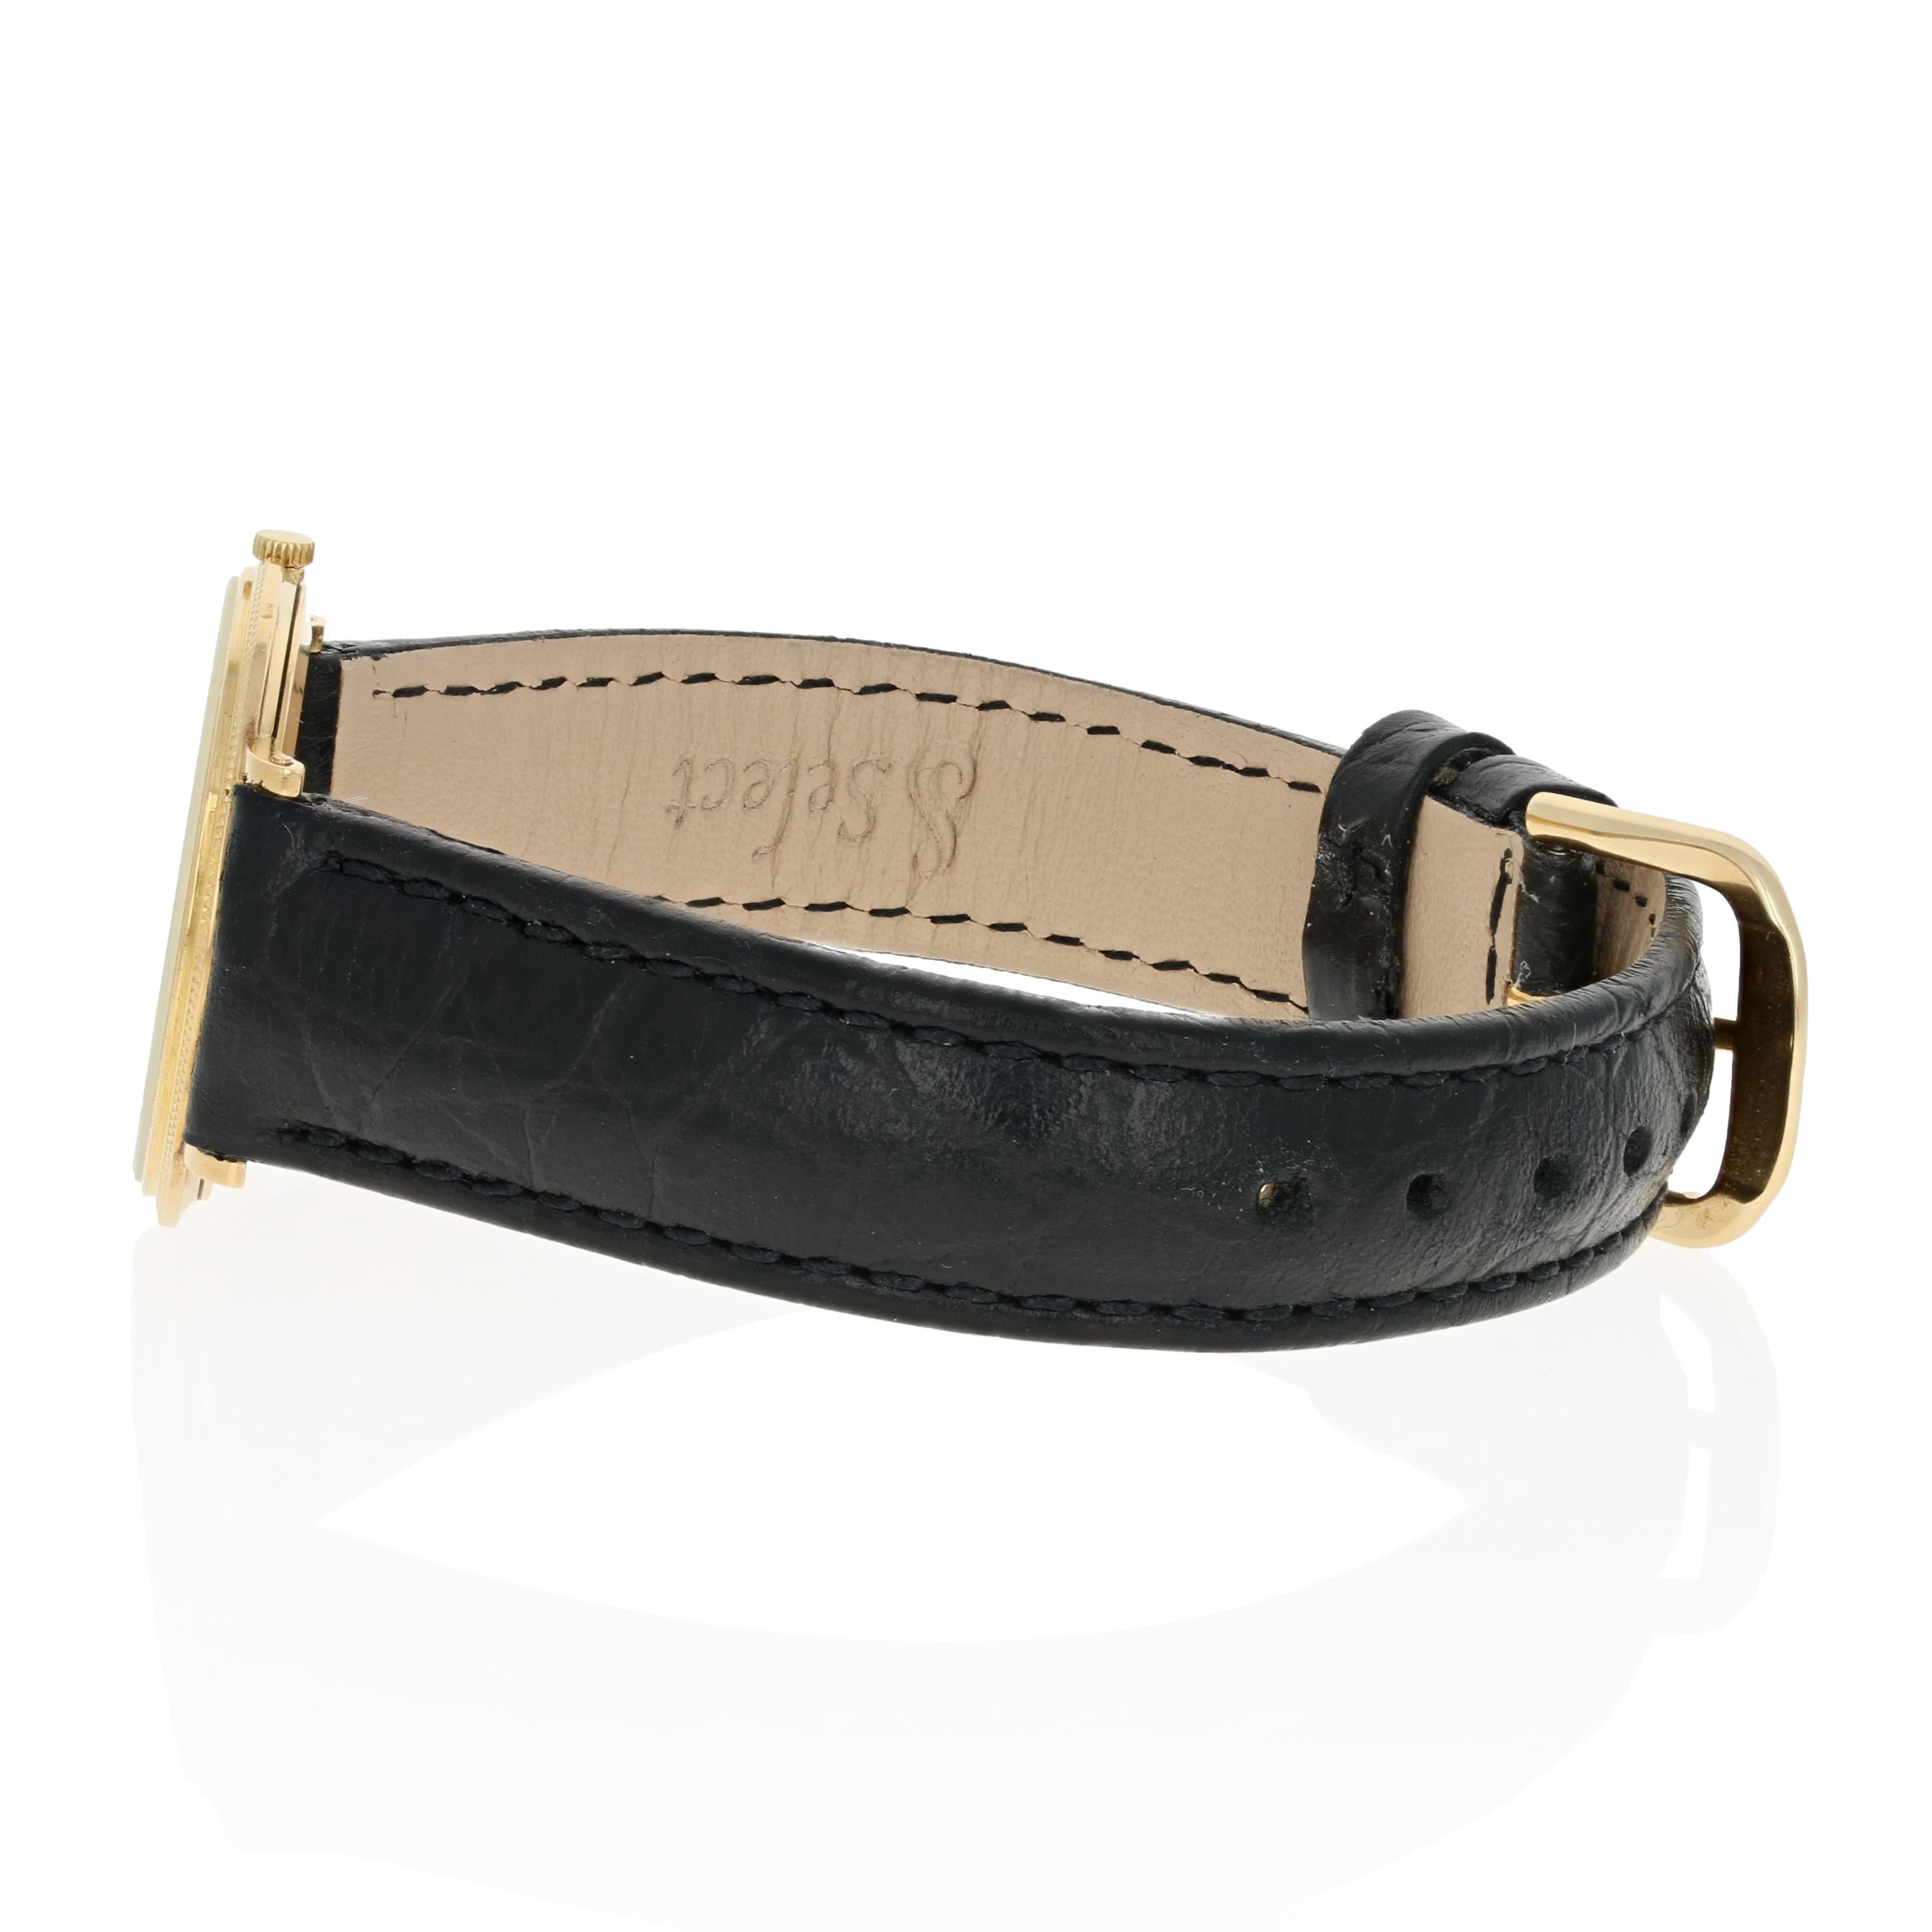 Piaget Men's Vintage Watch 18K Gold Leather Band Mechanical Movement 2Yr Wnty 2